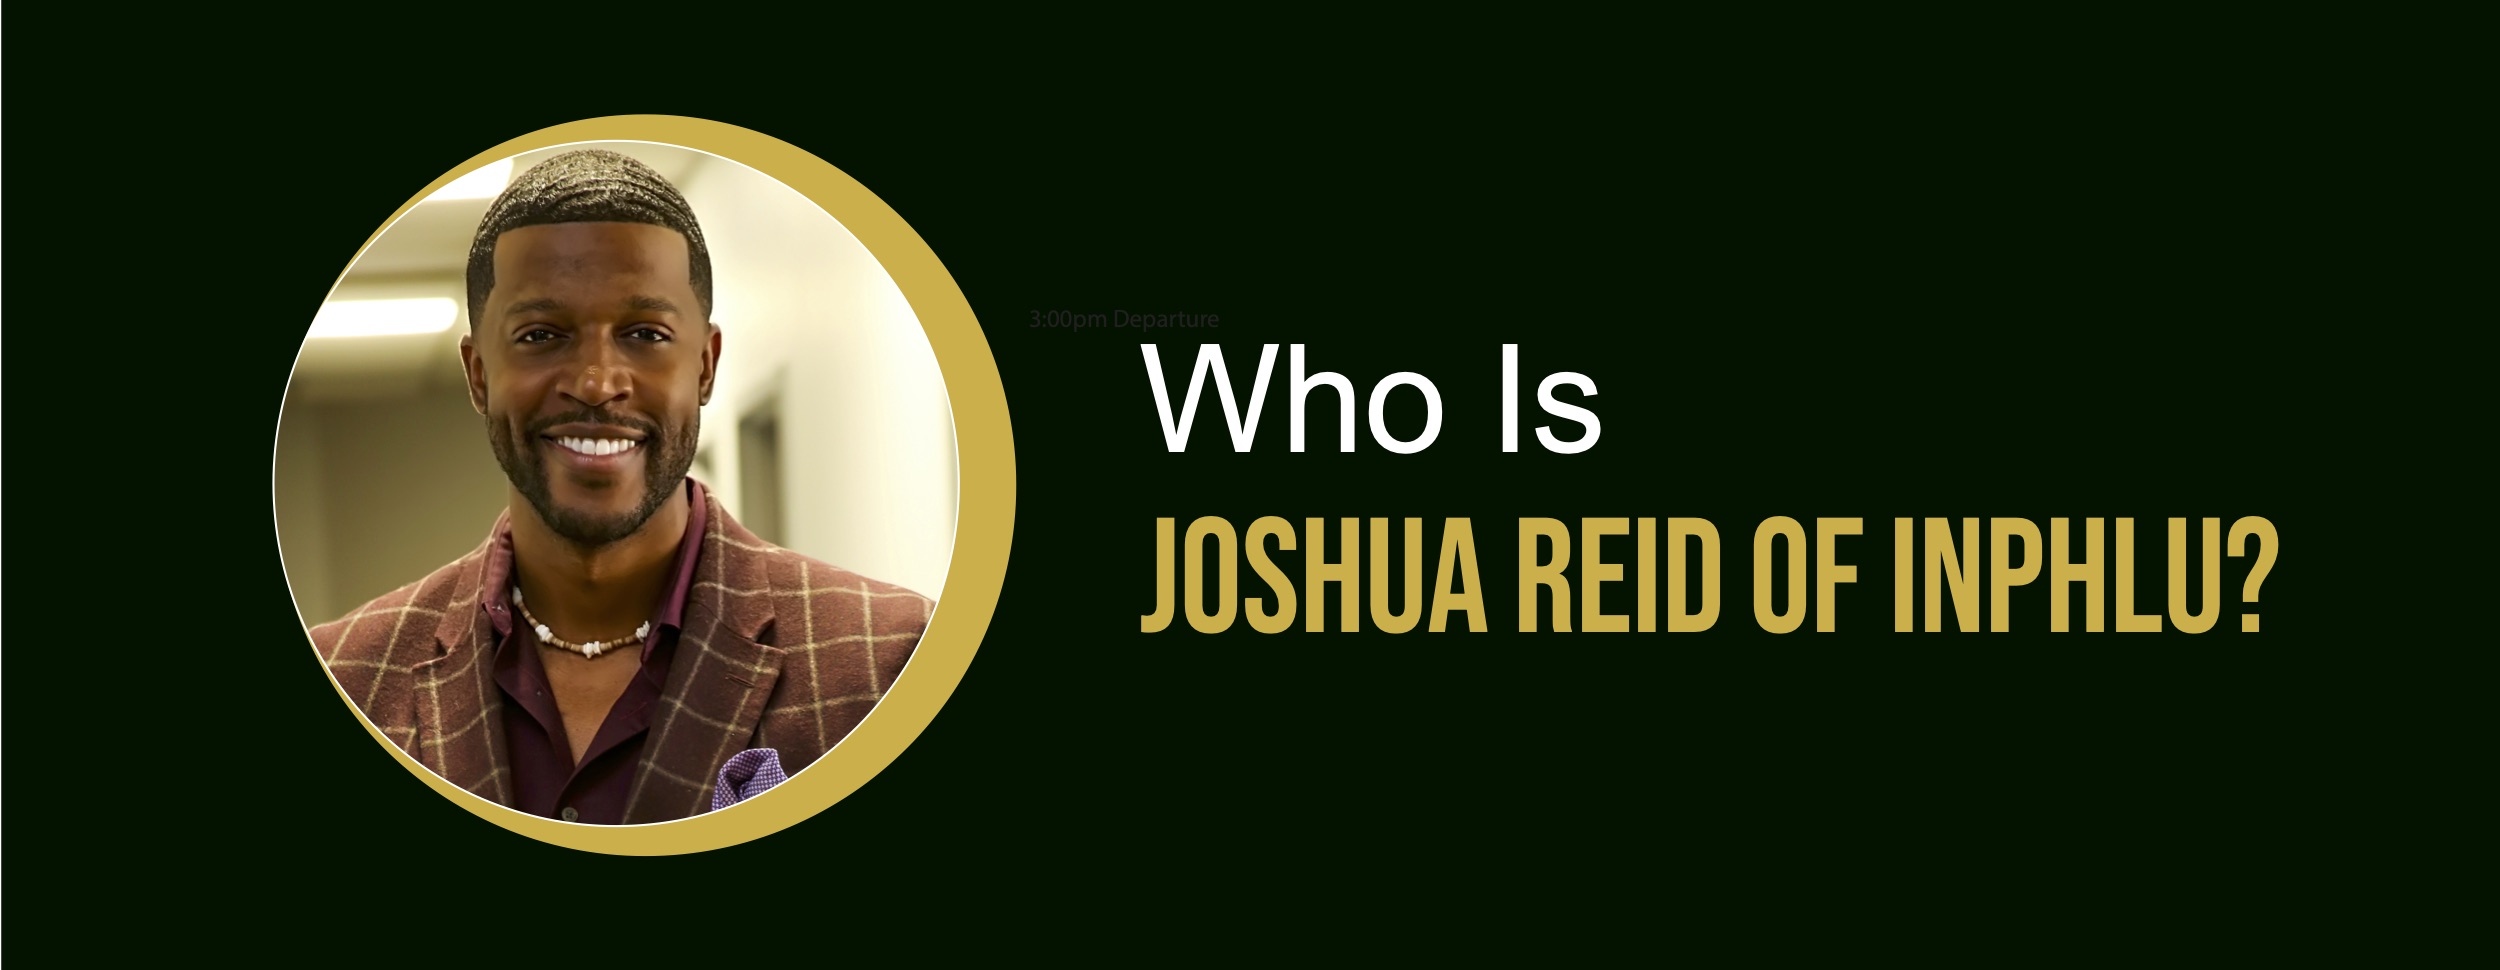 Joshua Reid founder of Inphlu